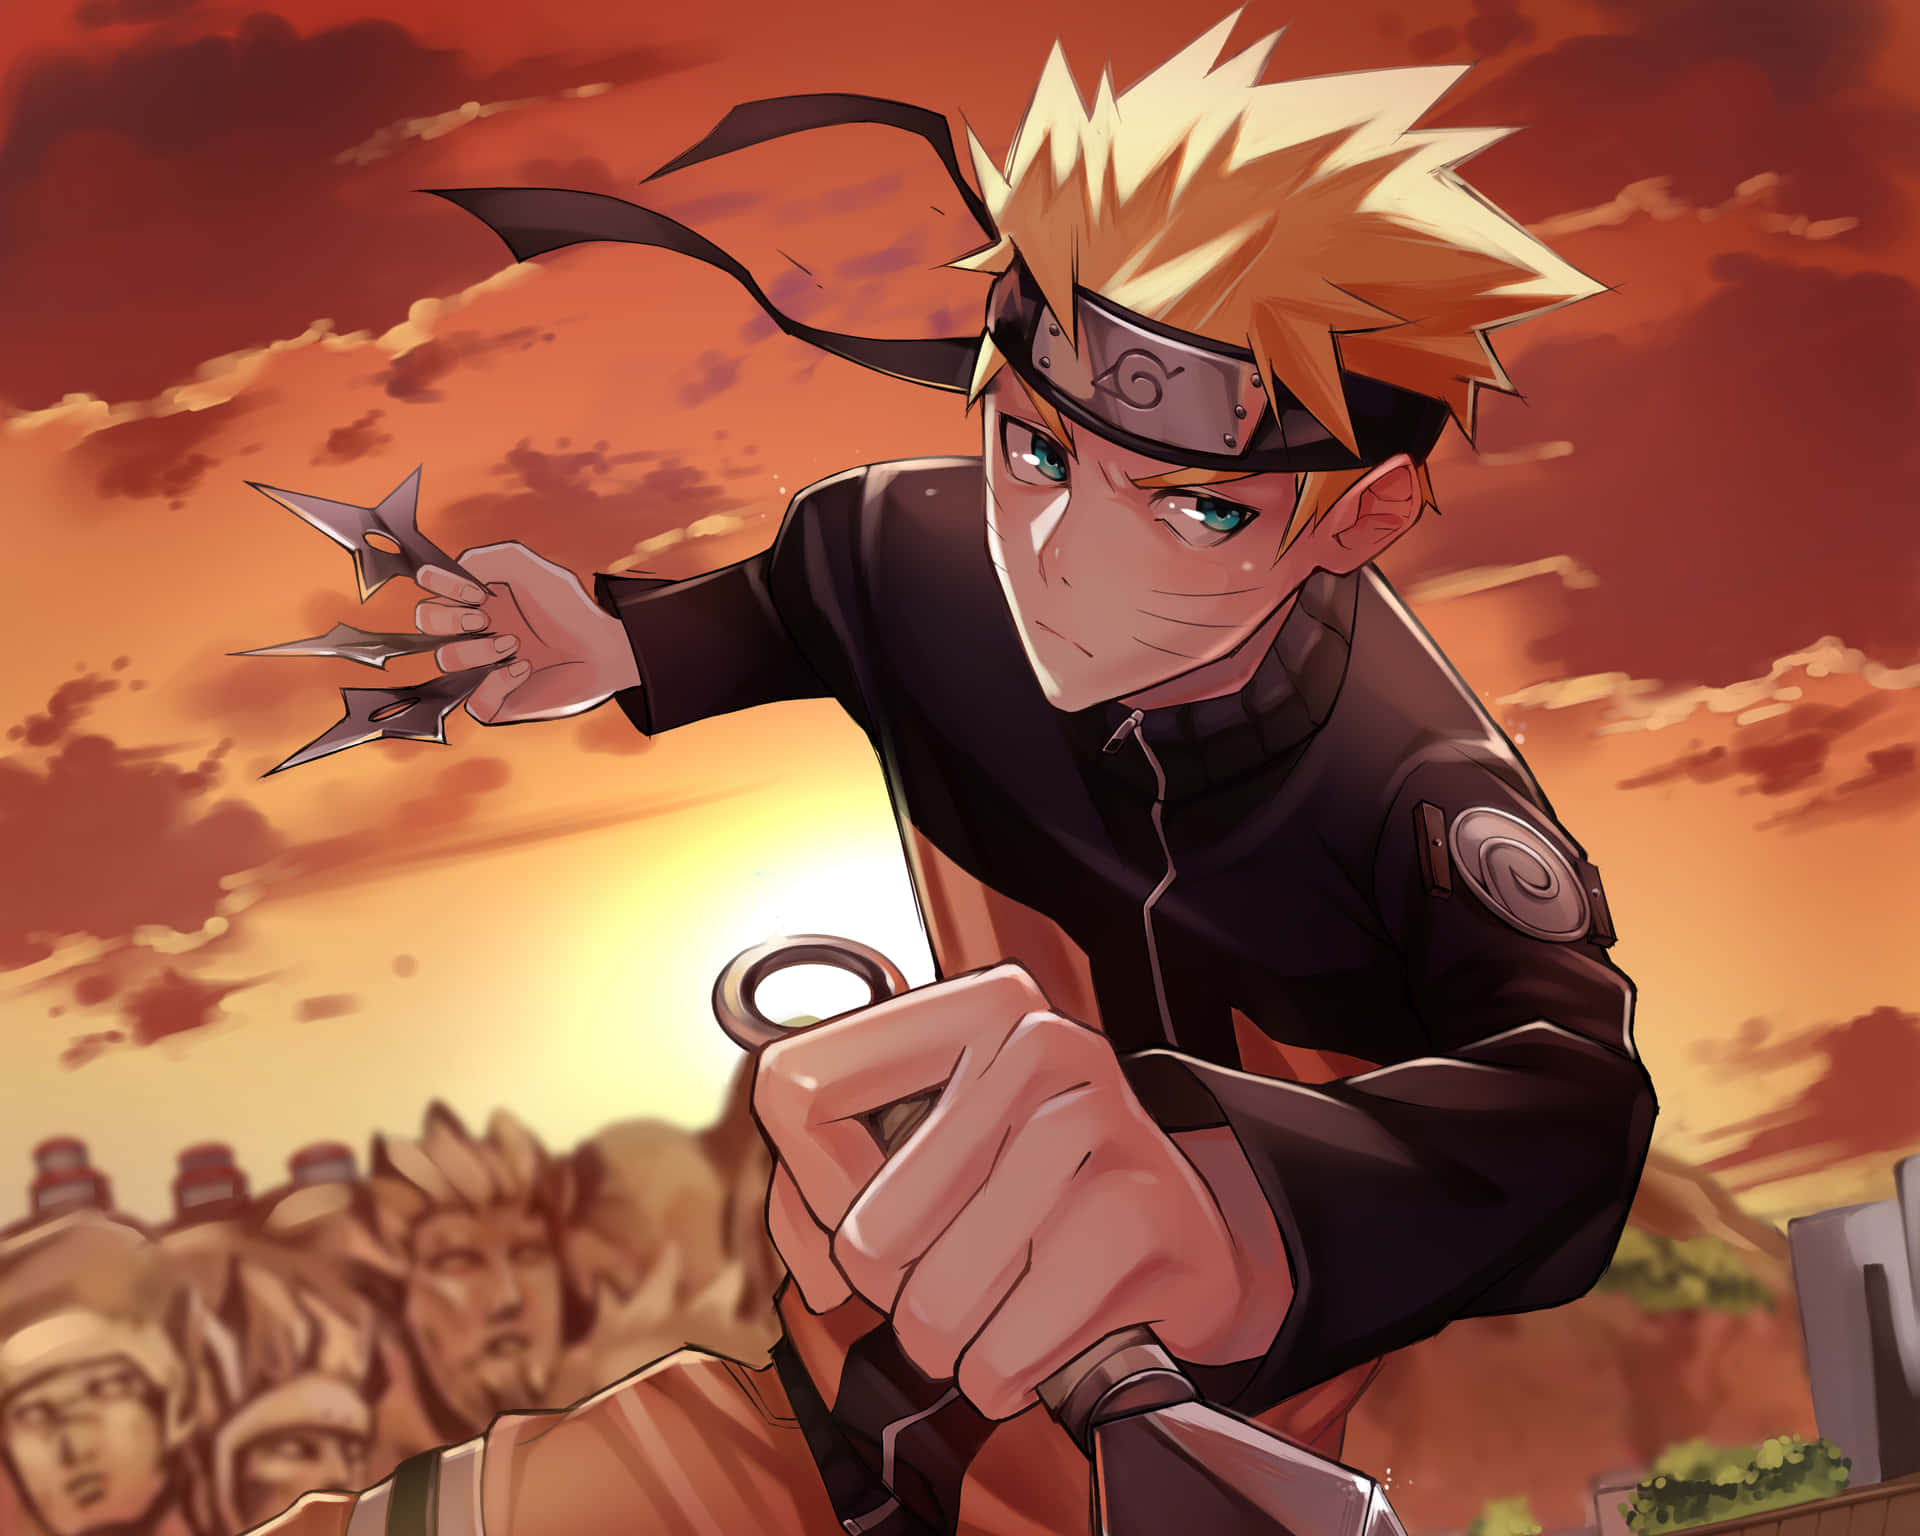 Image: The Wallpaper Of Anime - Naruto Uzumaki in 2020